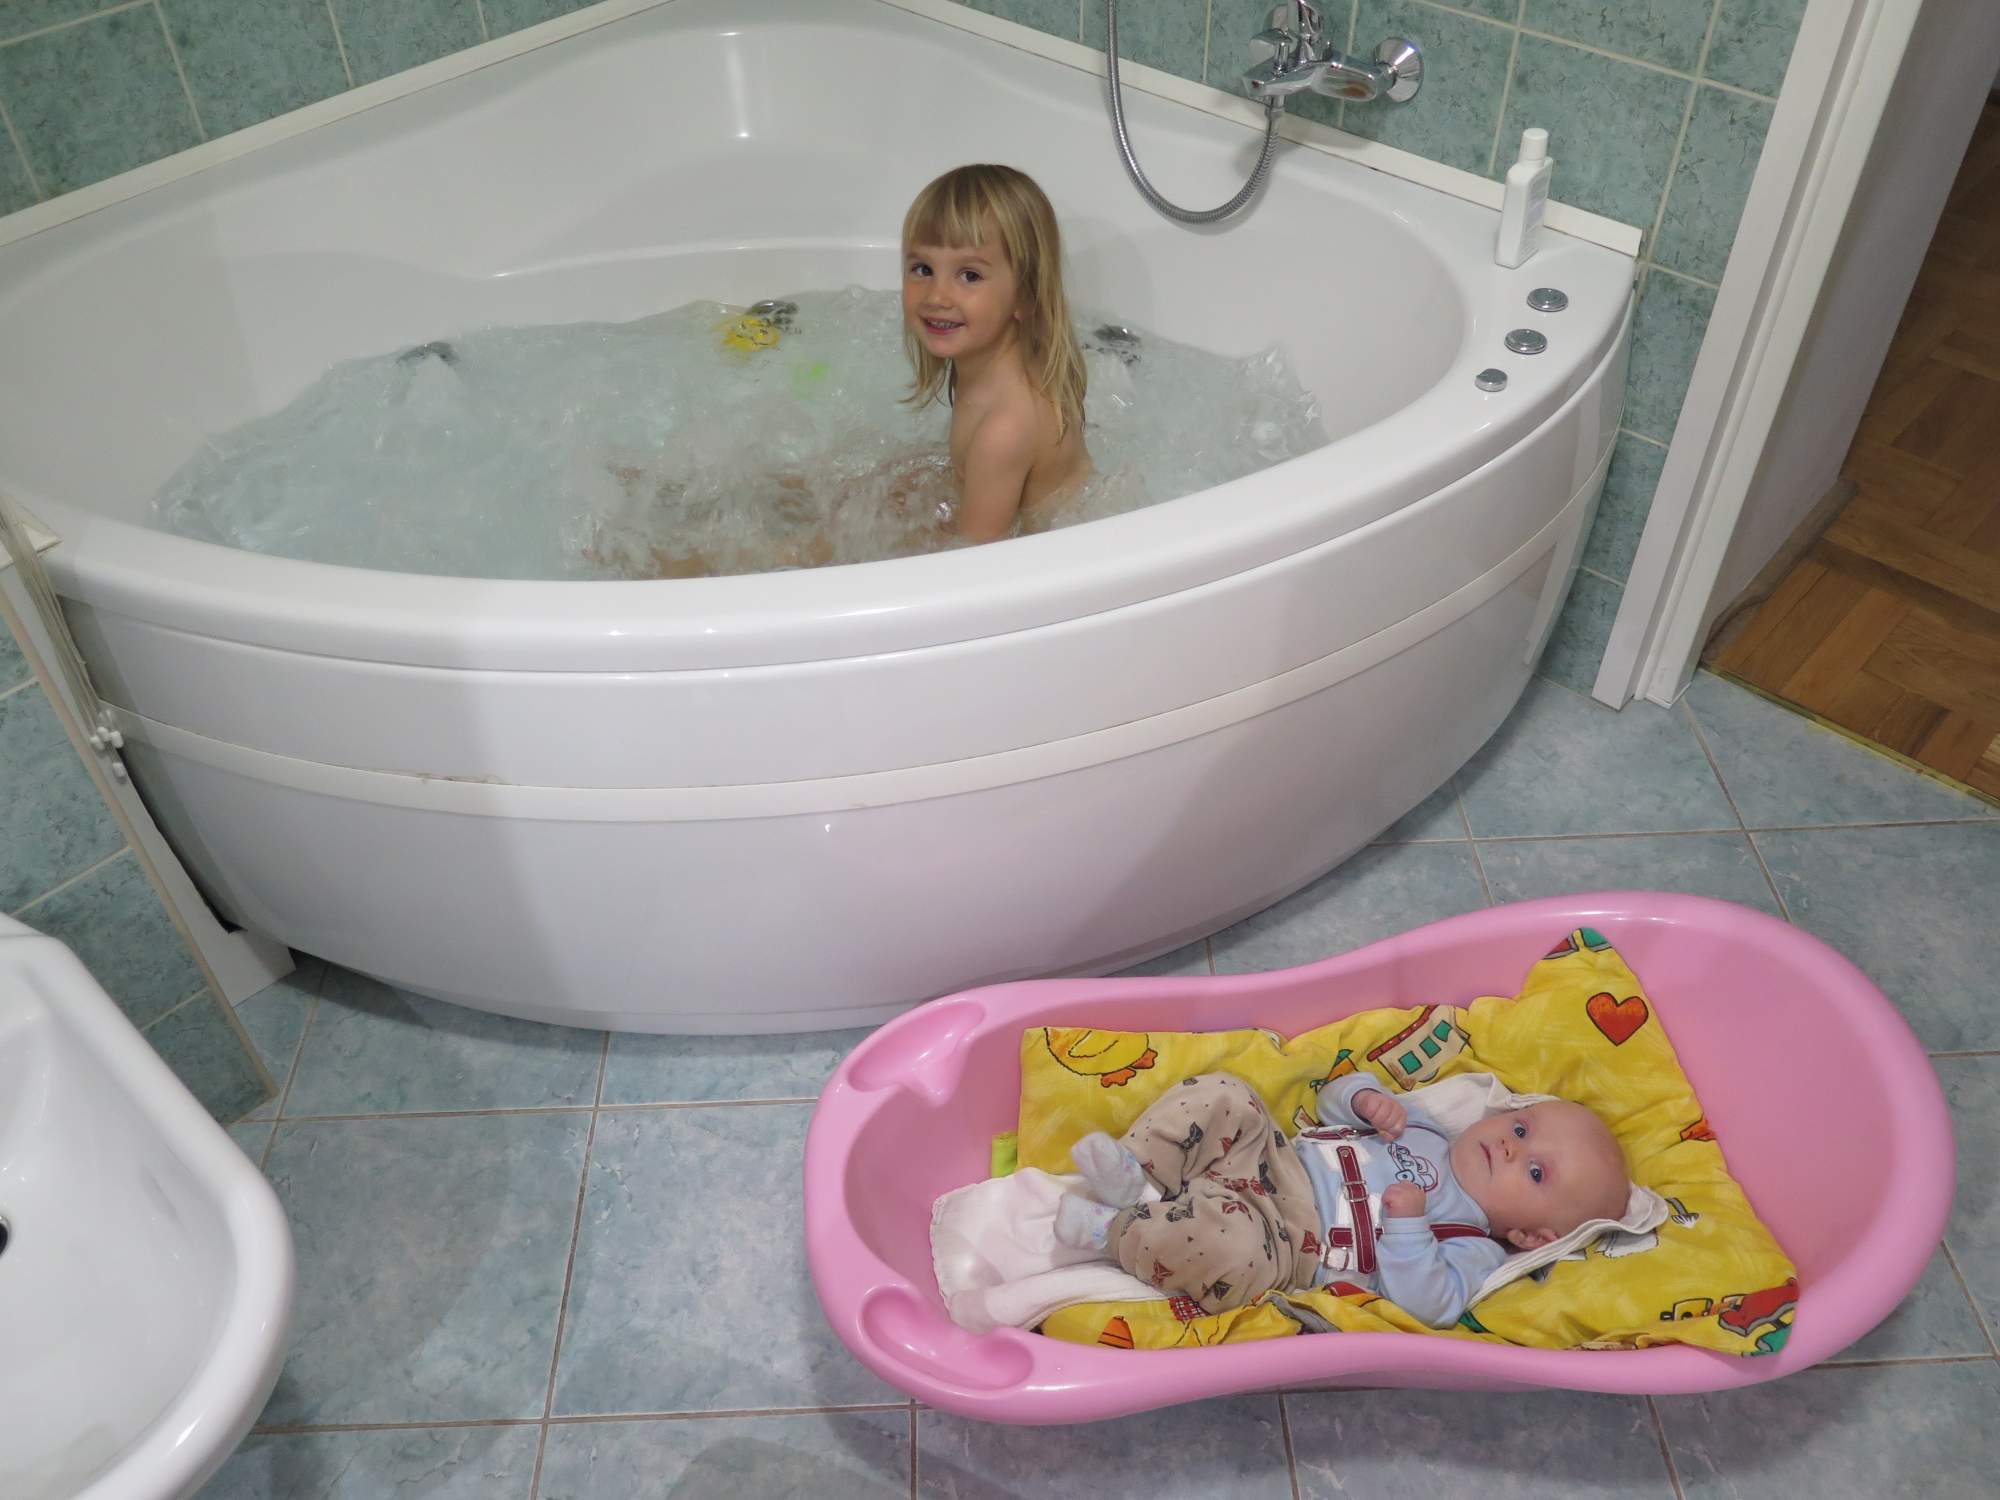 Rajce Bathning Kidsrajce Idnes Bath - Bank2home.com